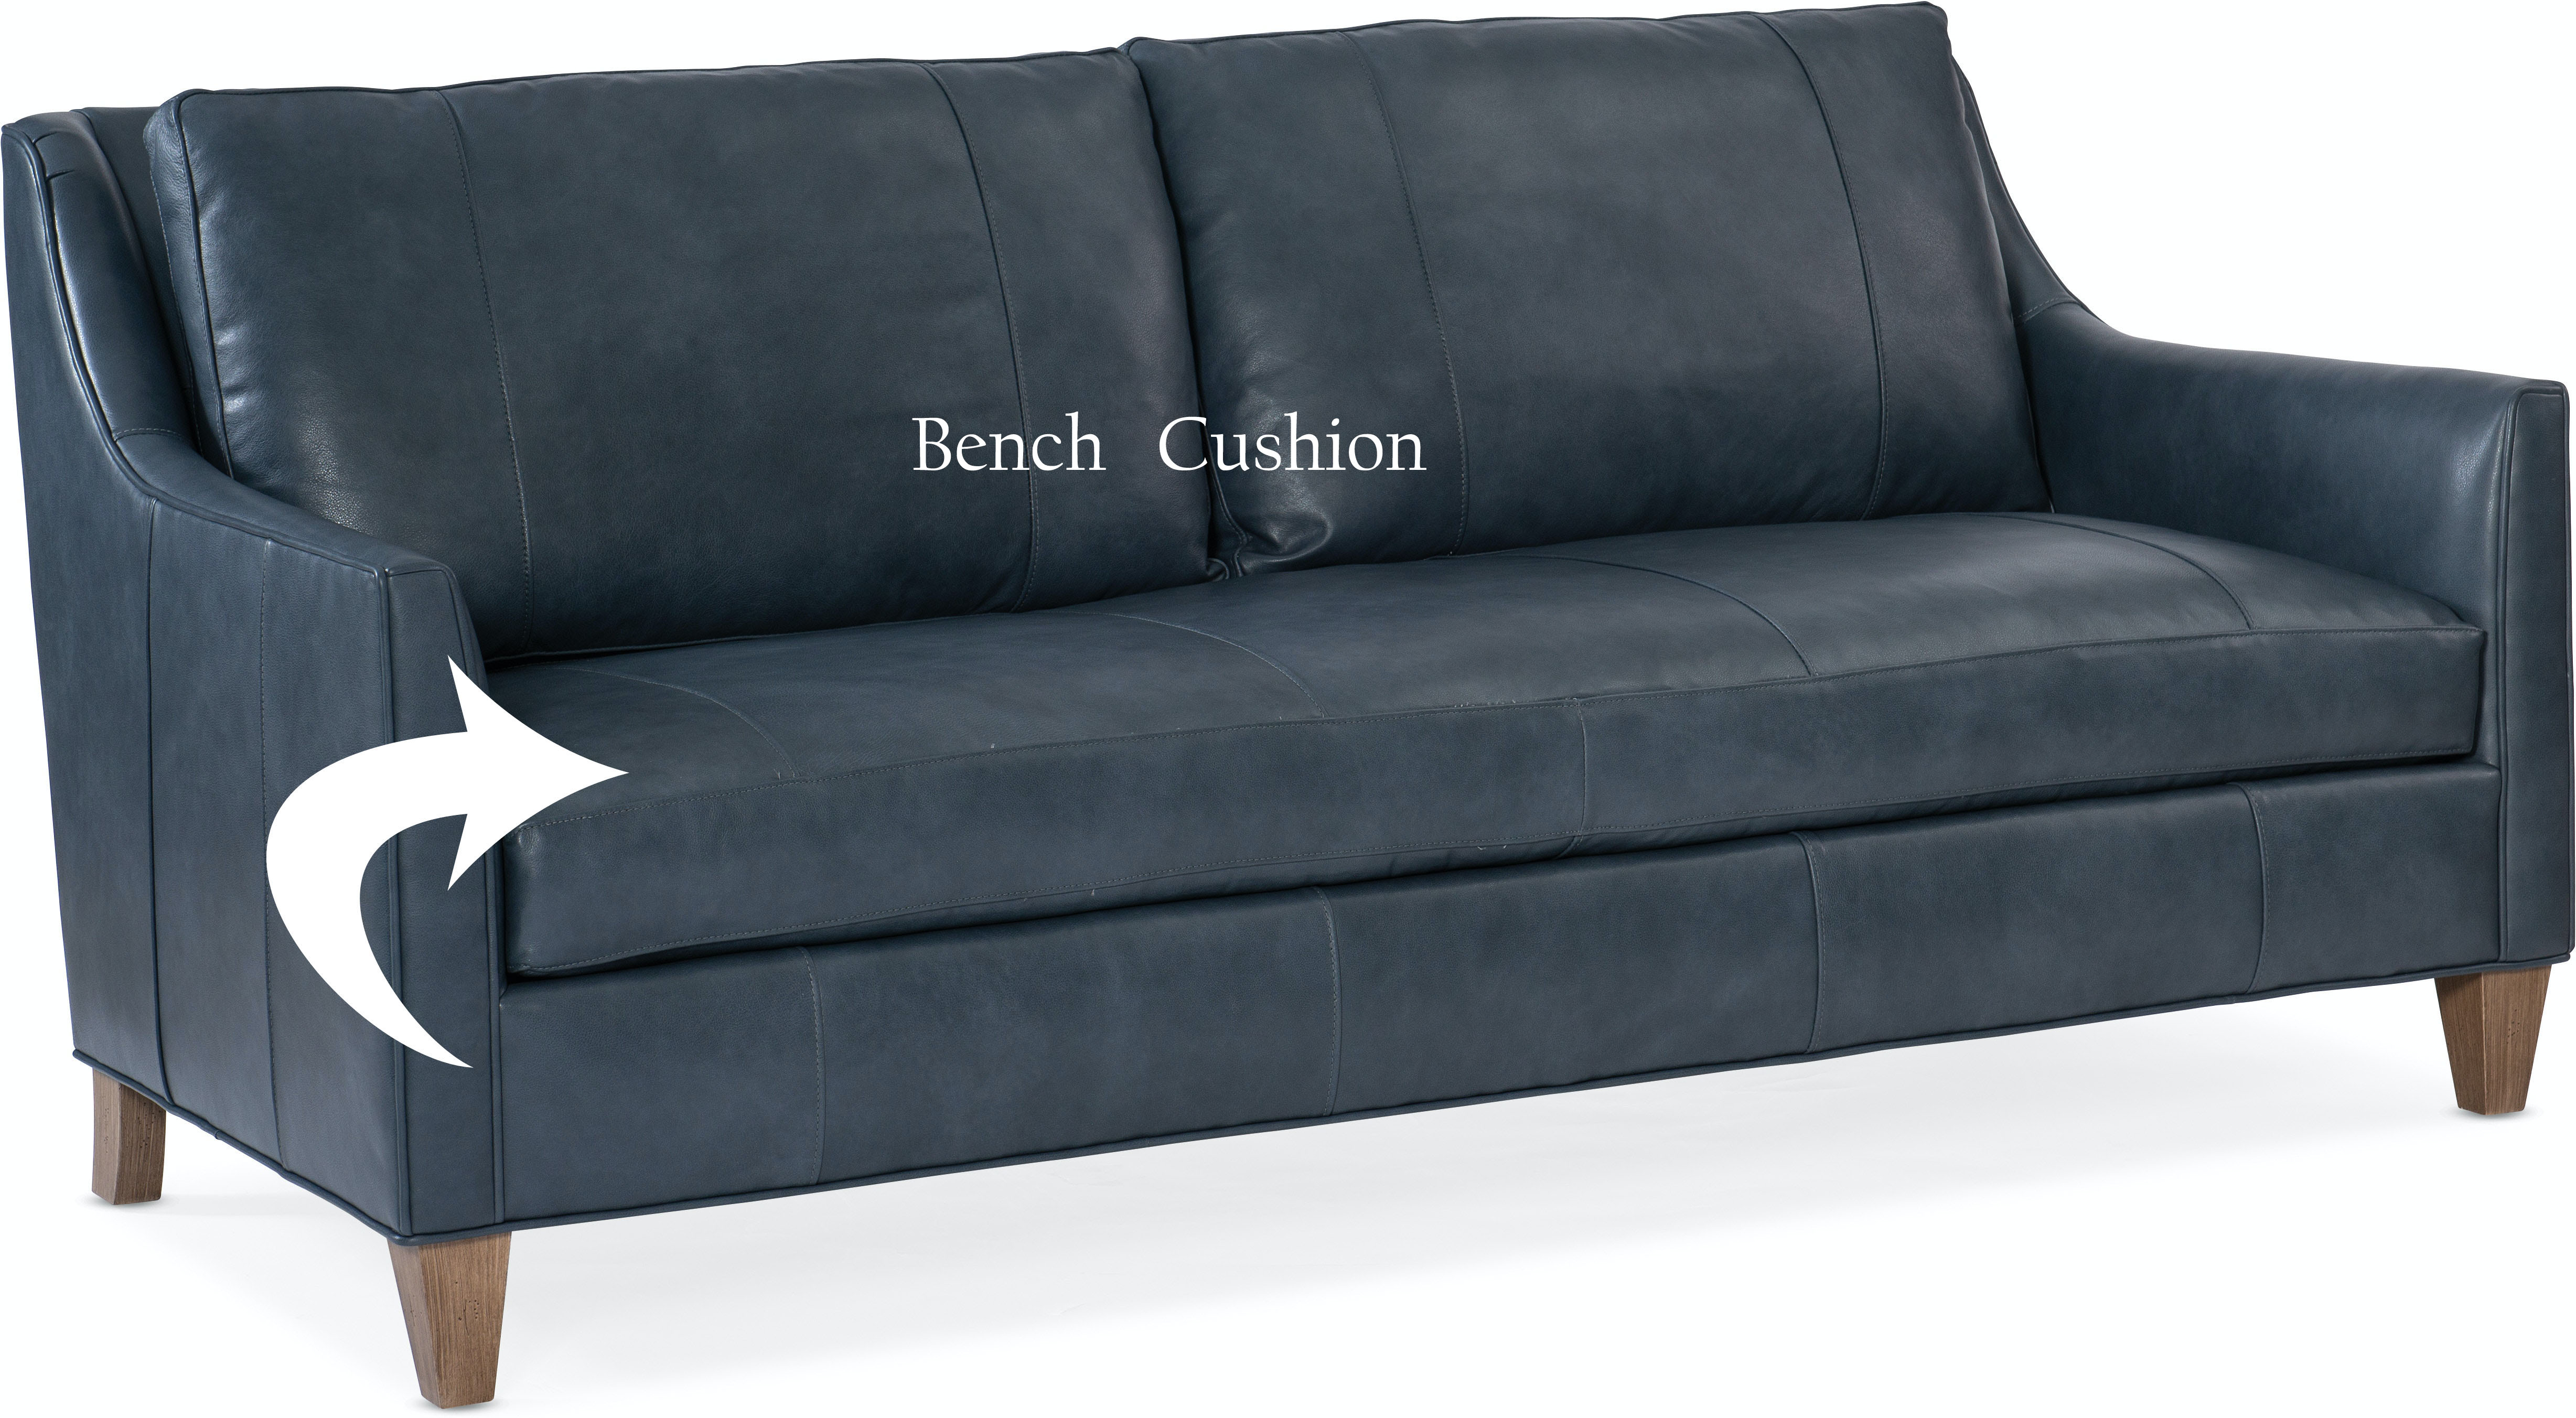 https://leathershoppes.com/product_images/uploaded_images/319-87-sofa-bench-cushion-arrow-text.jpg